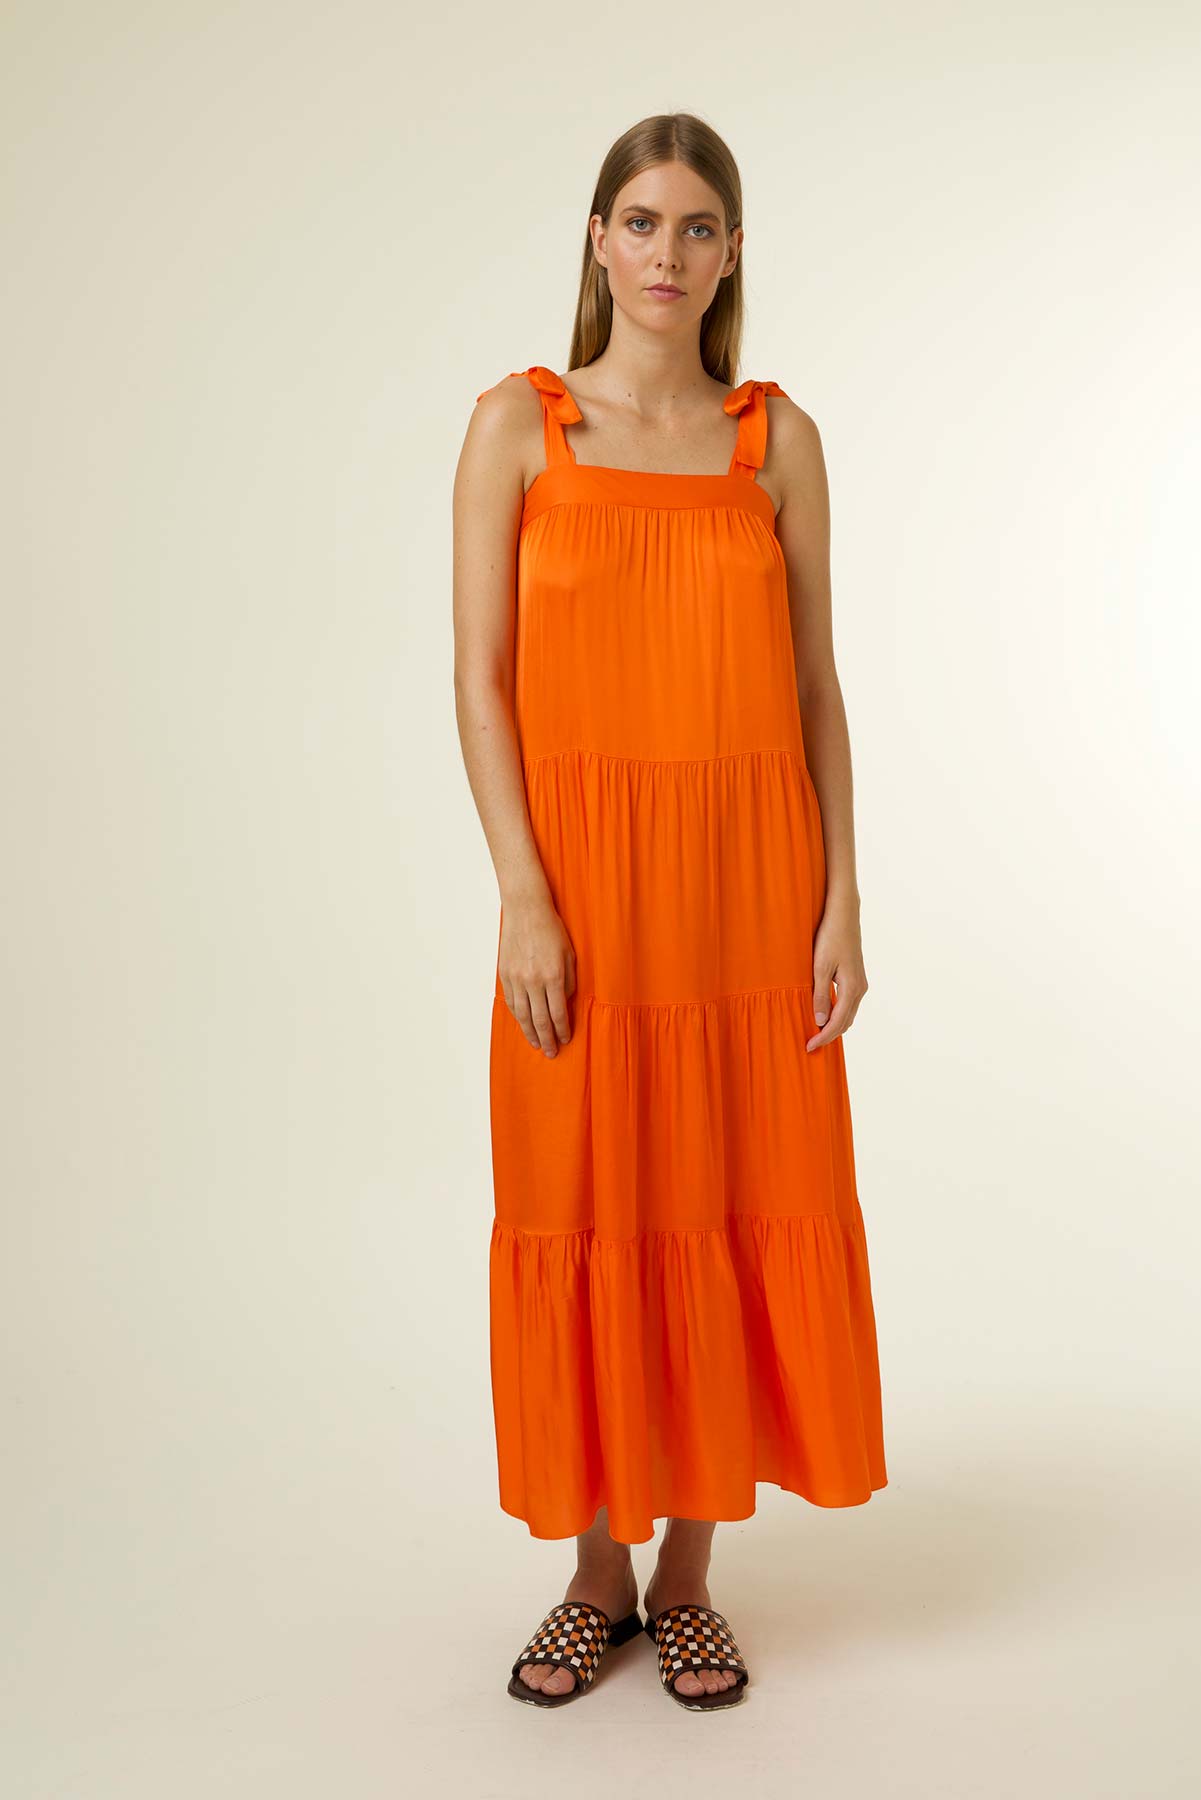 FRNCH - Rawen Dress - Orange